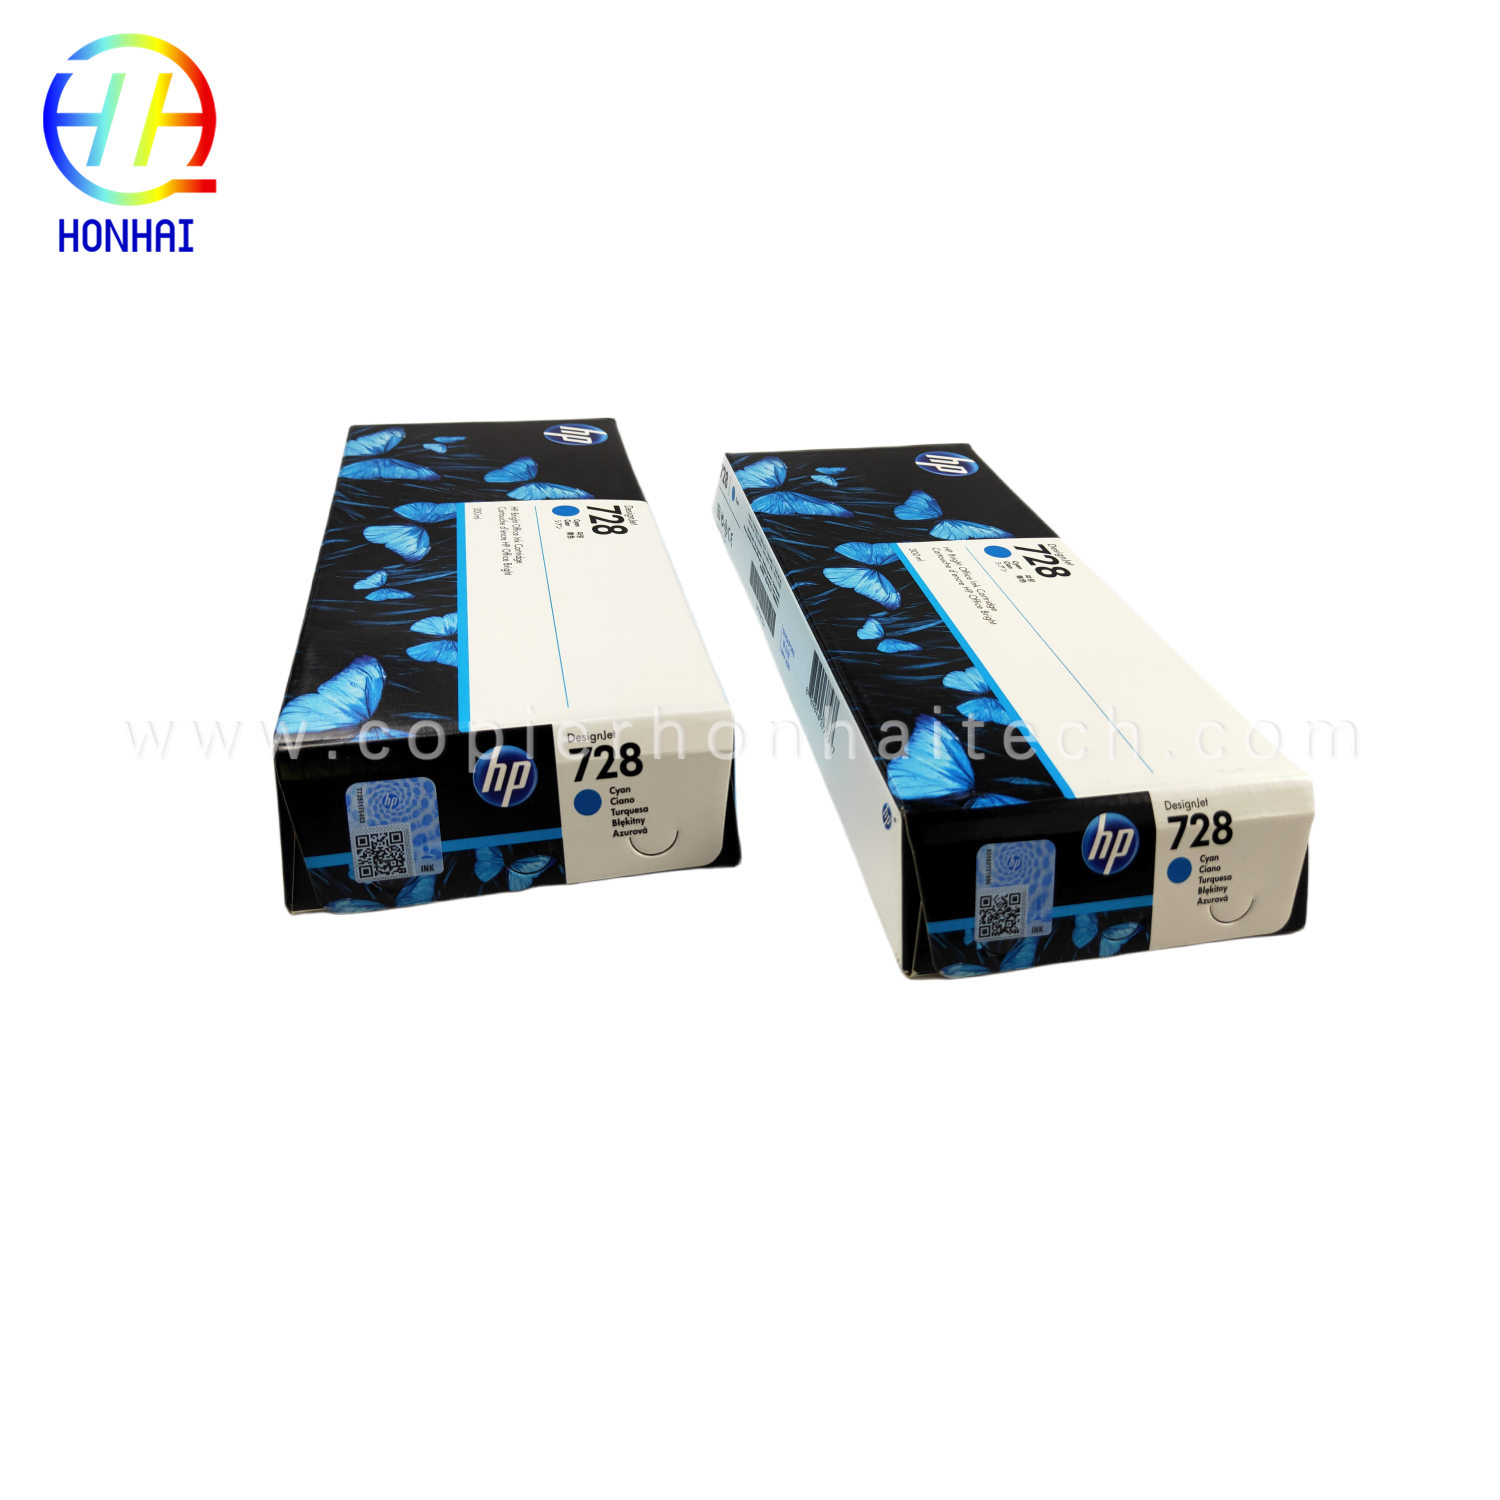 https://www.copierhonhaitech.com/original-new-ink-cartridge-cyan-for-hp-designjet-t730-and-t830-large-format-plotter-printers-and-hp-729-designjet-printhead- 728-f9k17a-táirge/